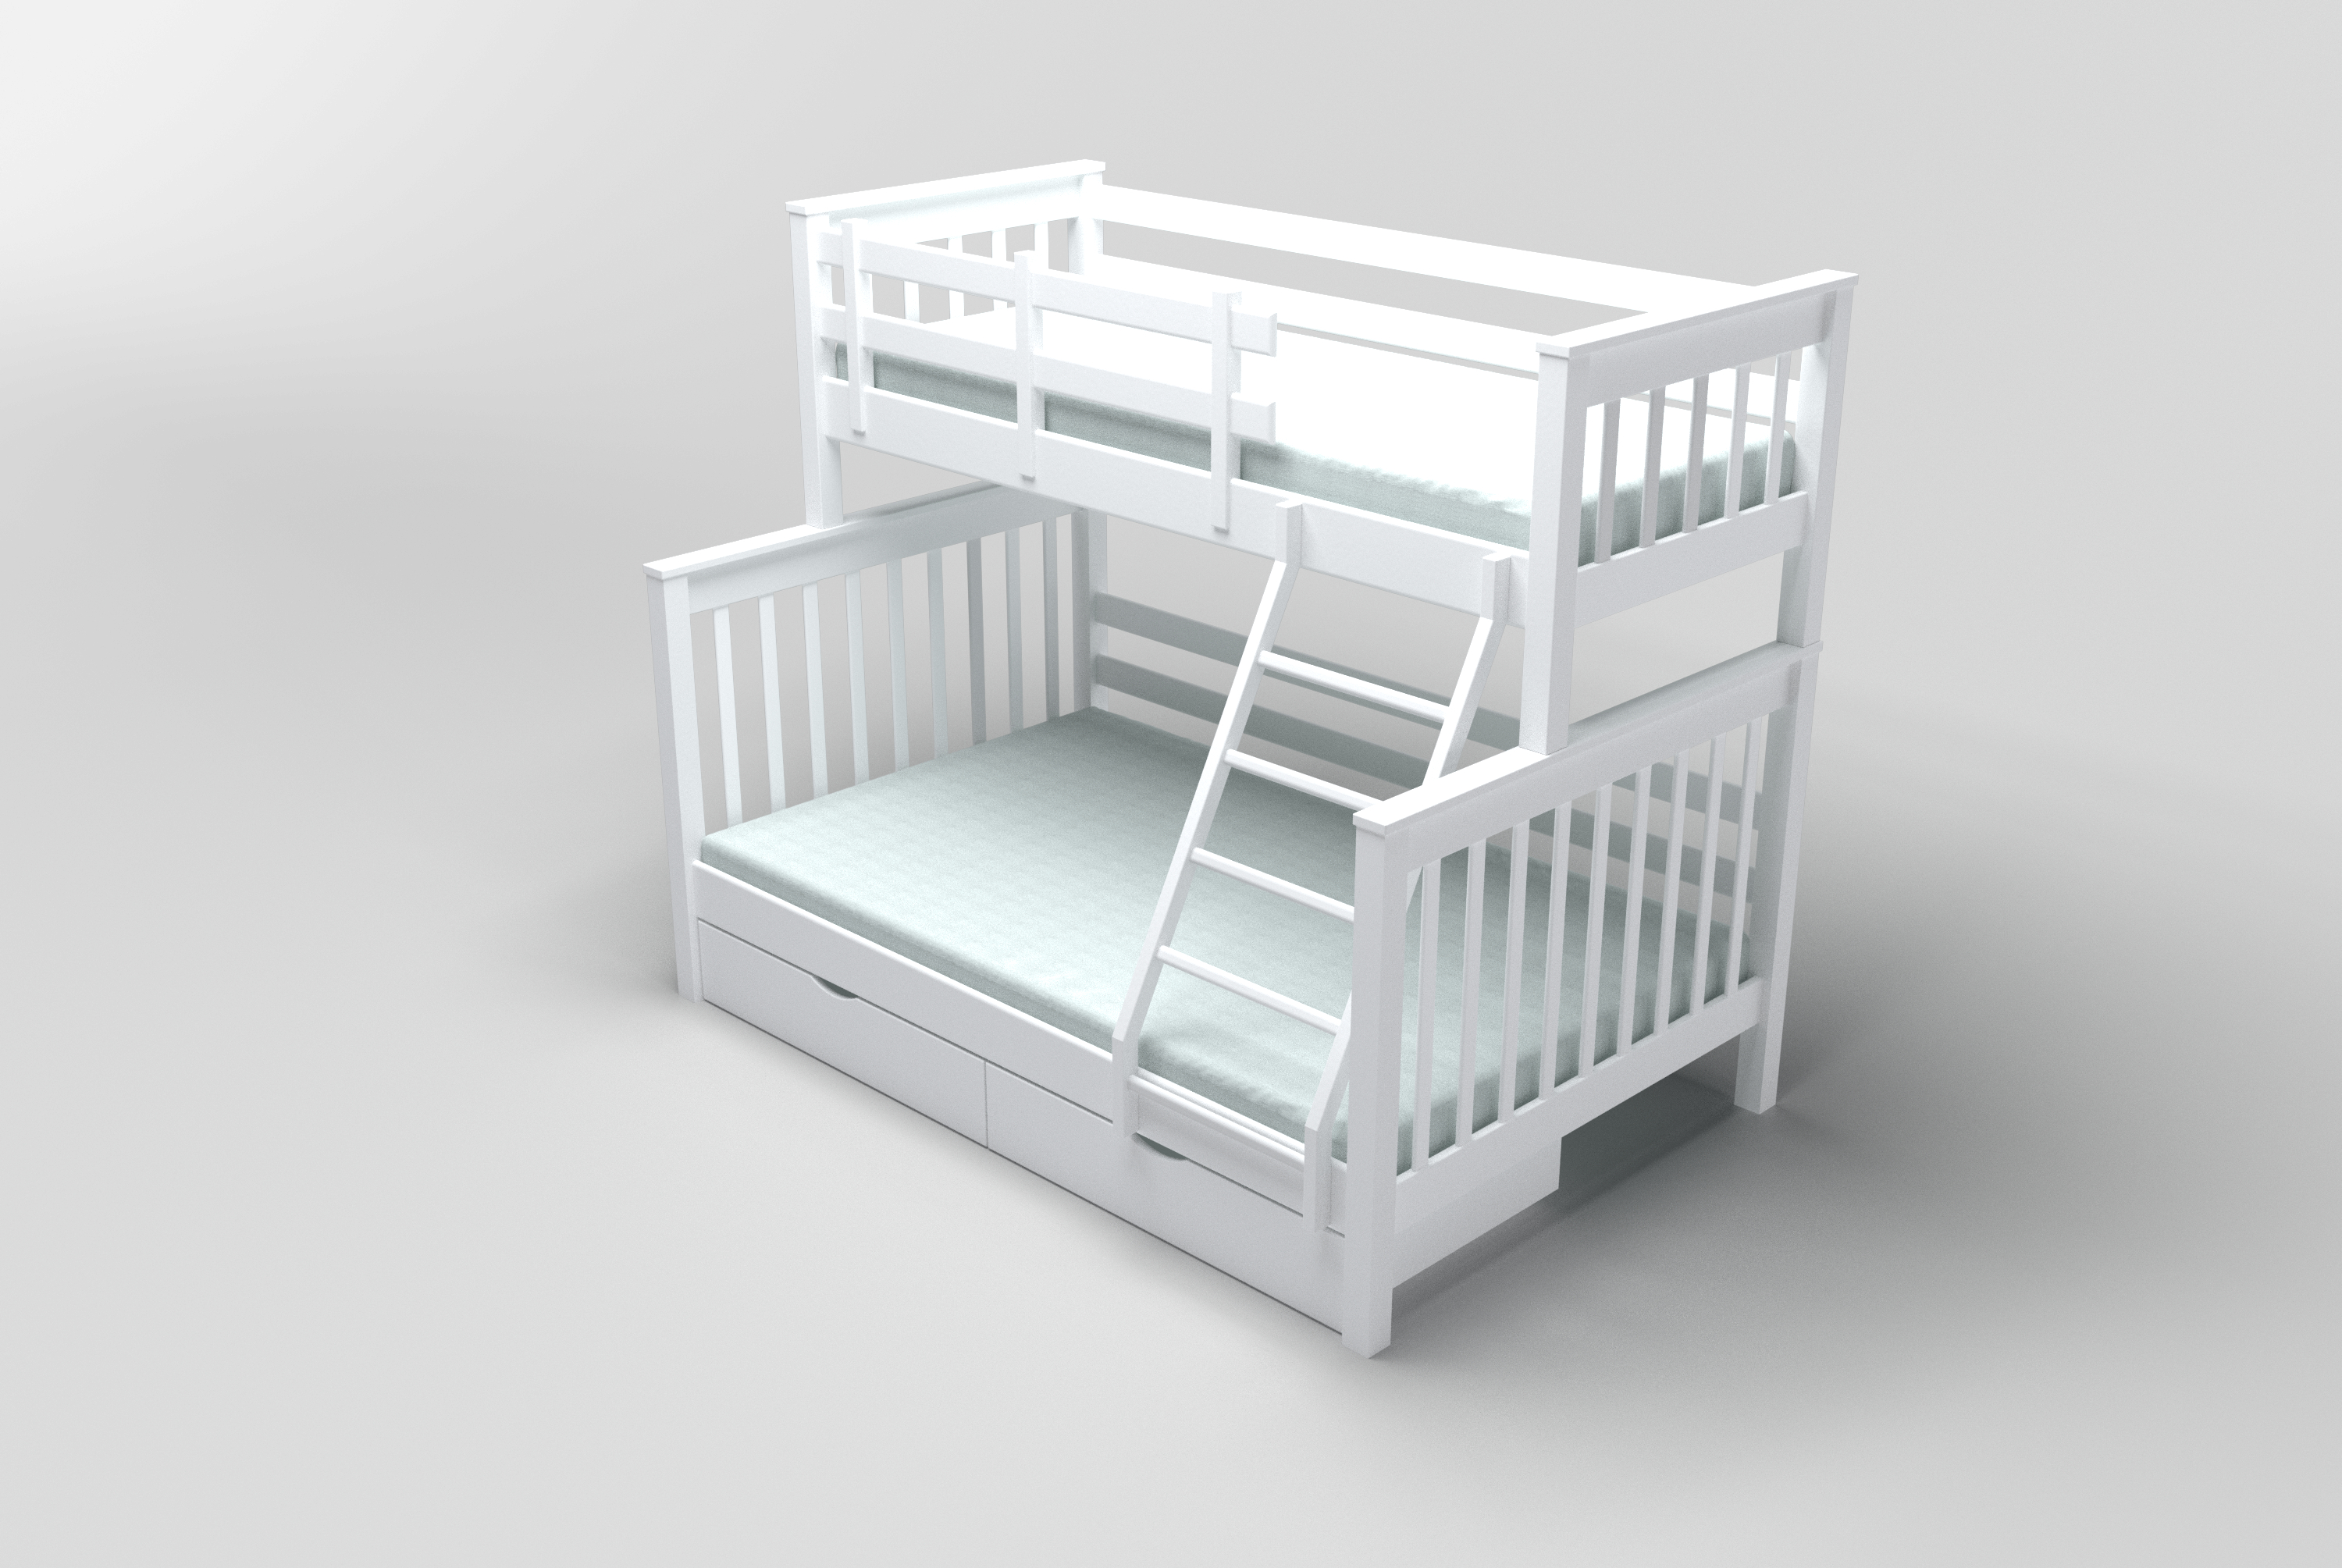 Çocuk 2 katlı yatak in 3d max vray 3.0 resim